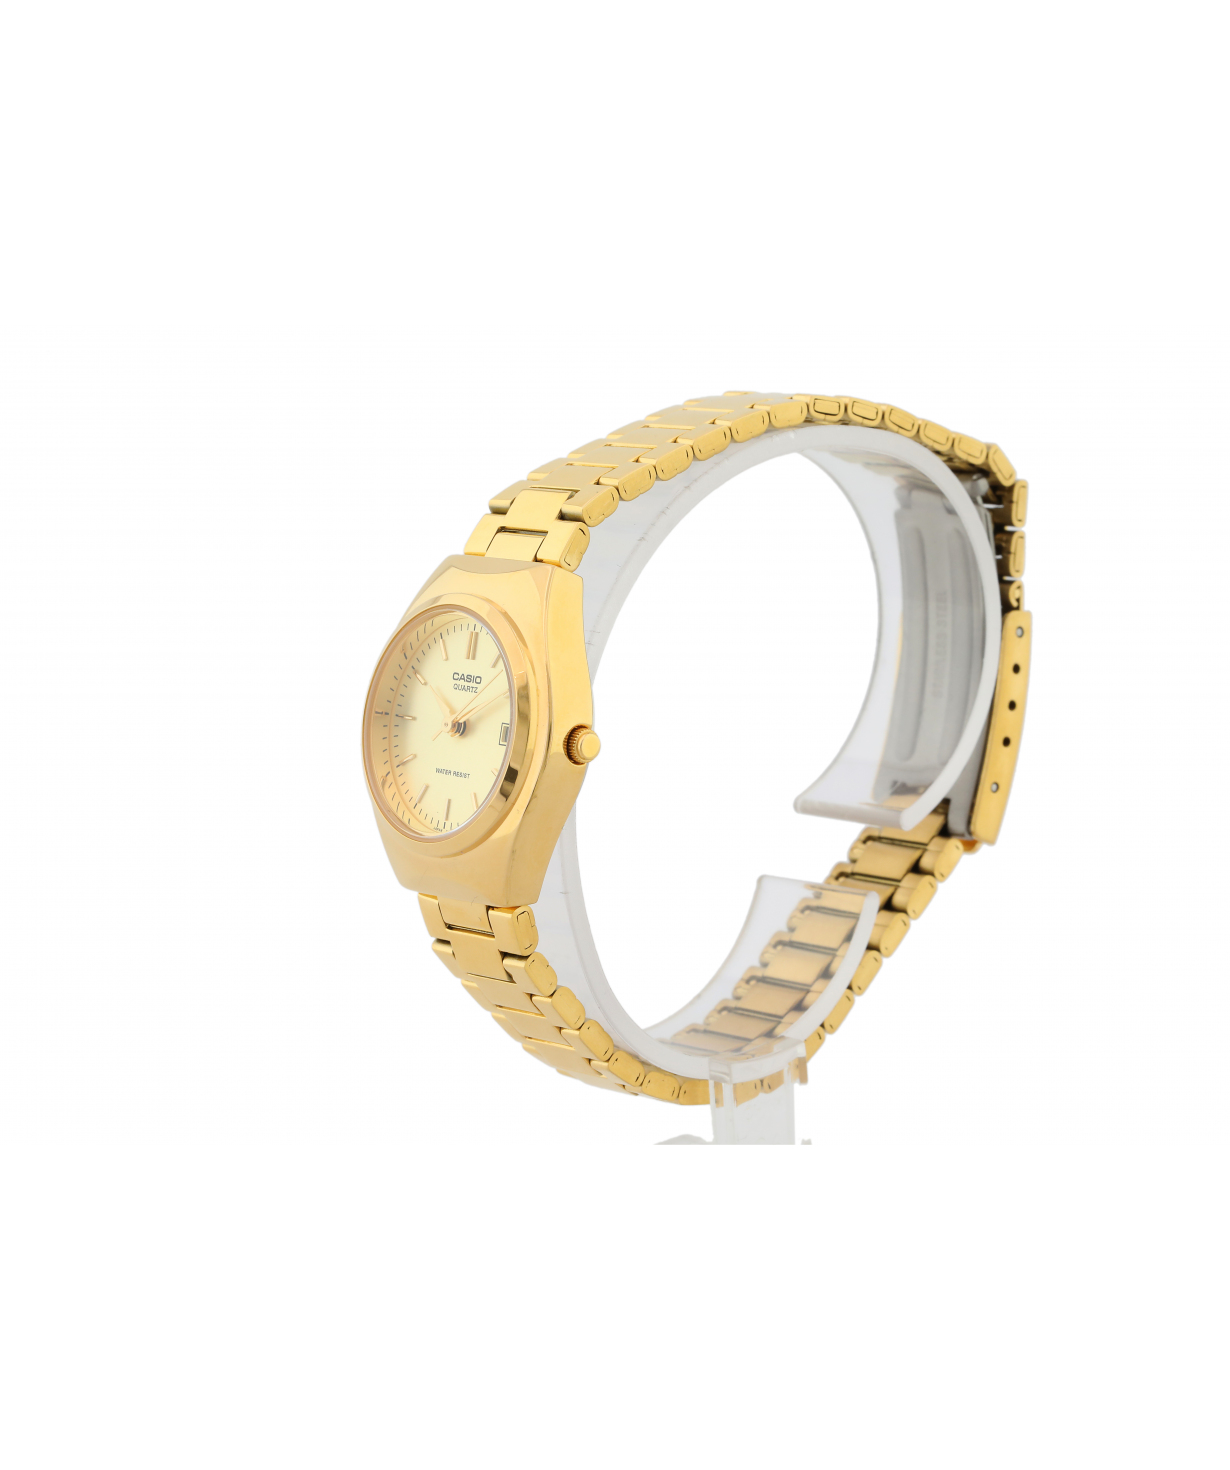 Wristwatch `Casio` LTP-1170N-9ARDF